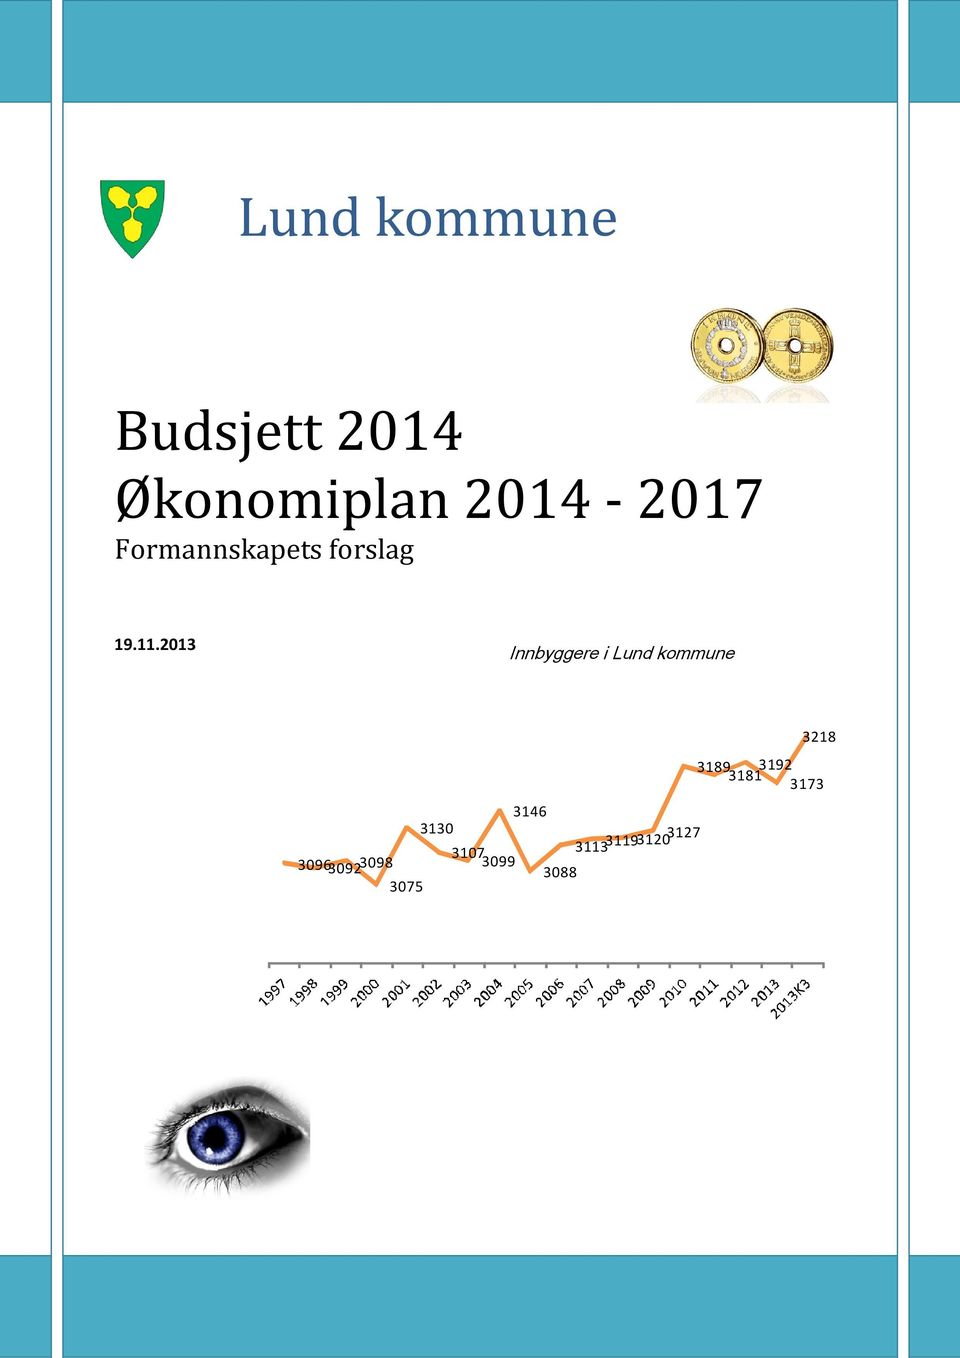 2013 Innbyggere i Lund kommune 30963092 3098